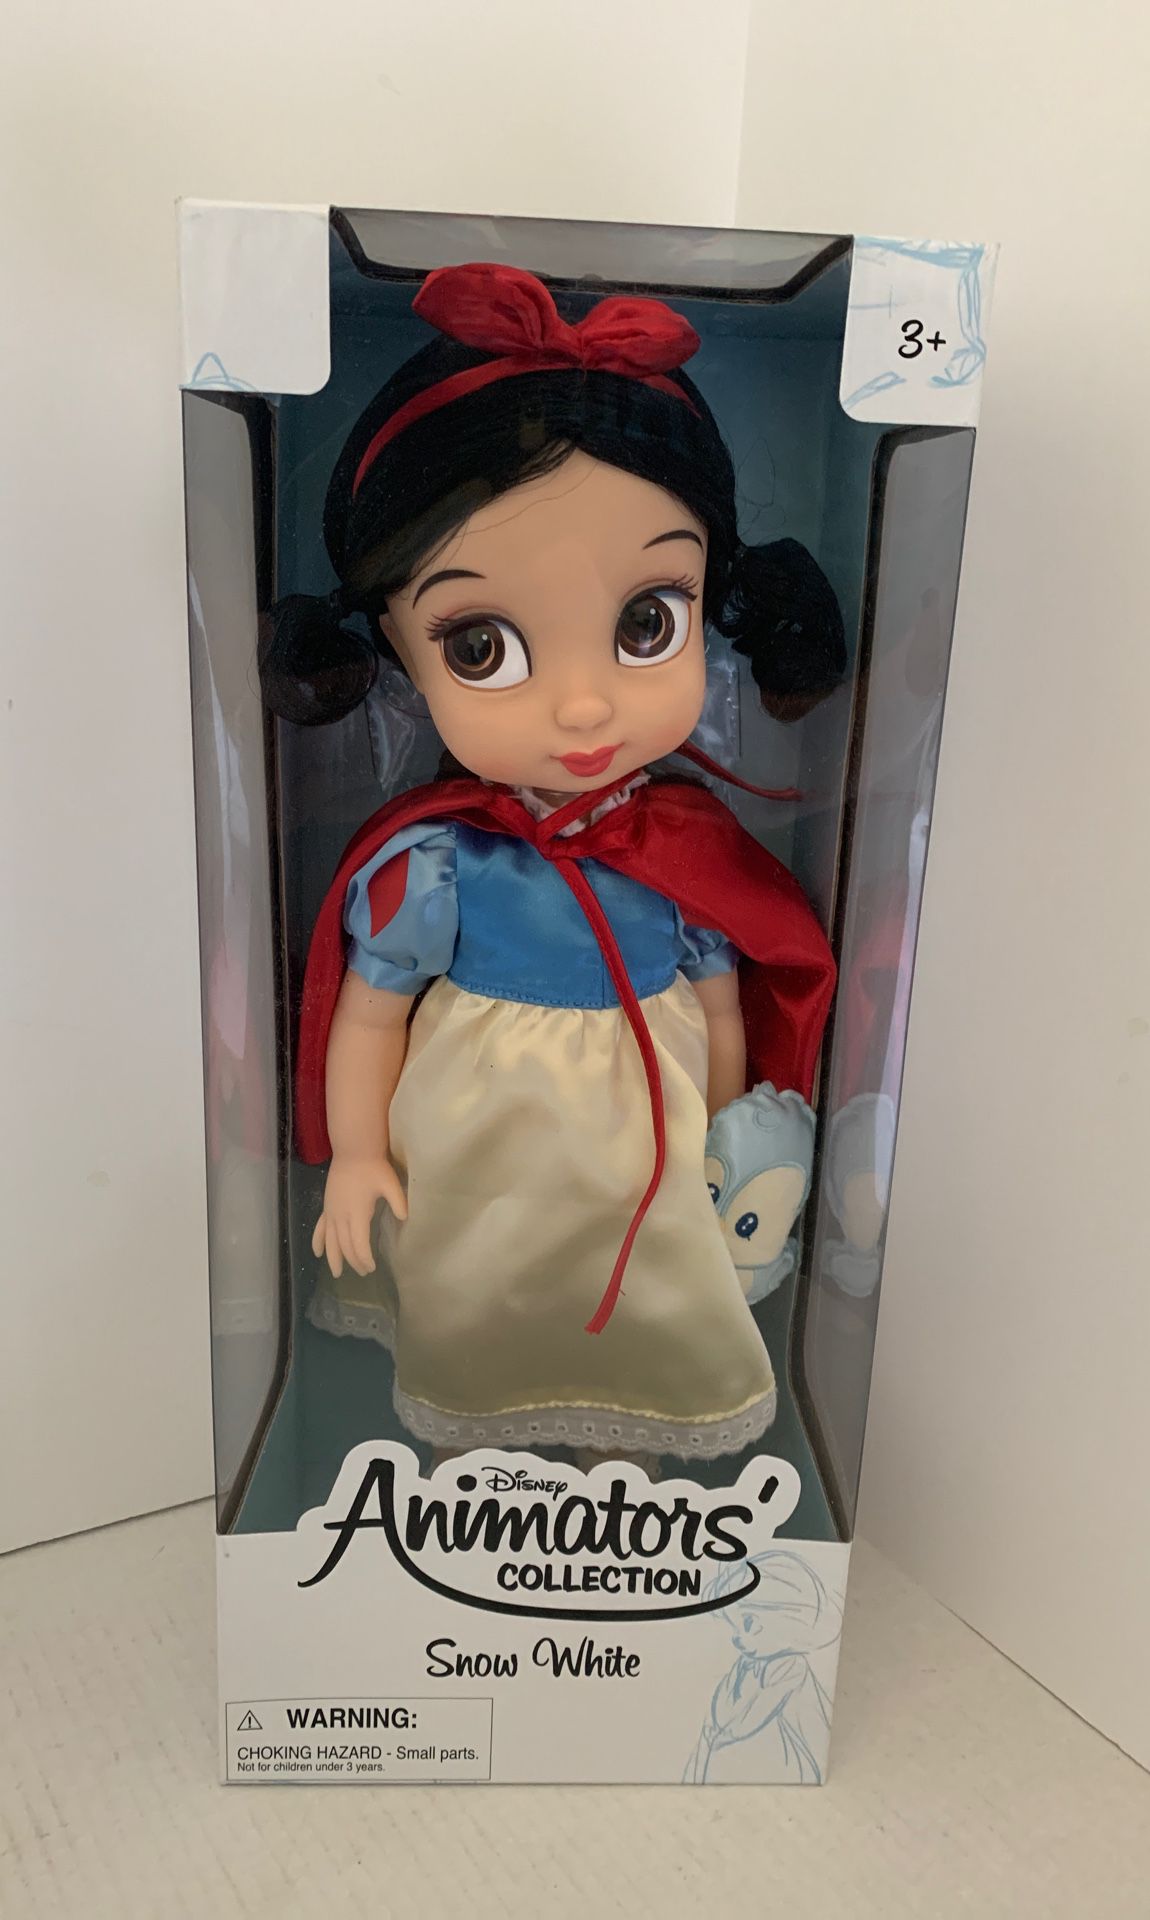 Disney Animators collection Snow White first edition